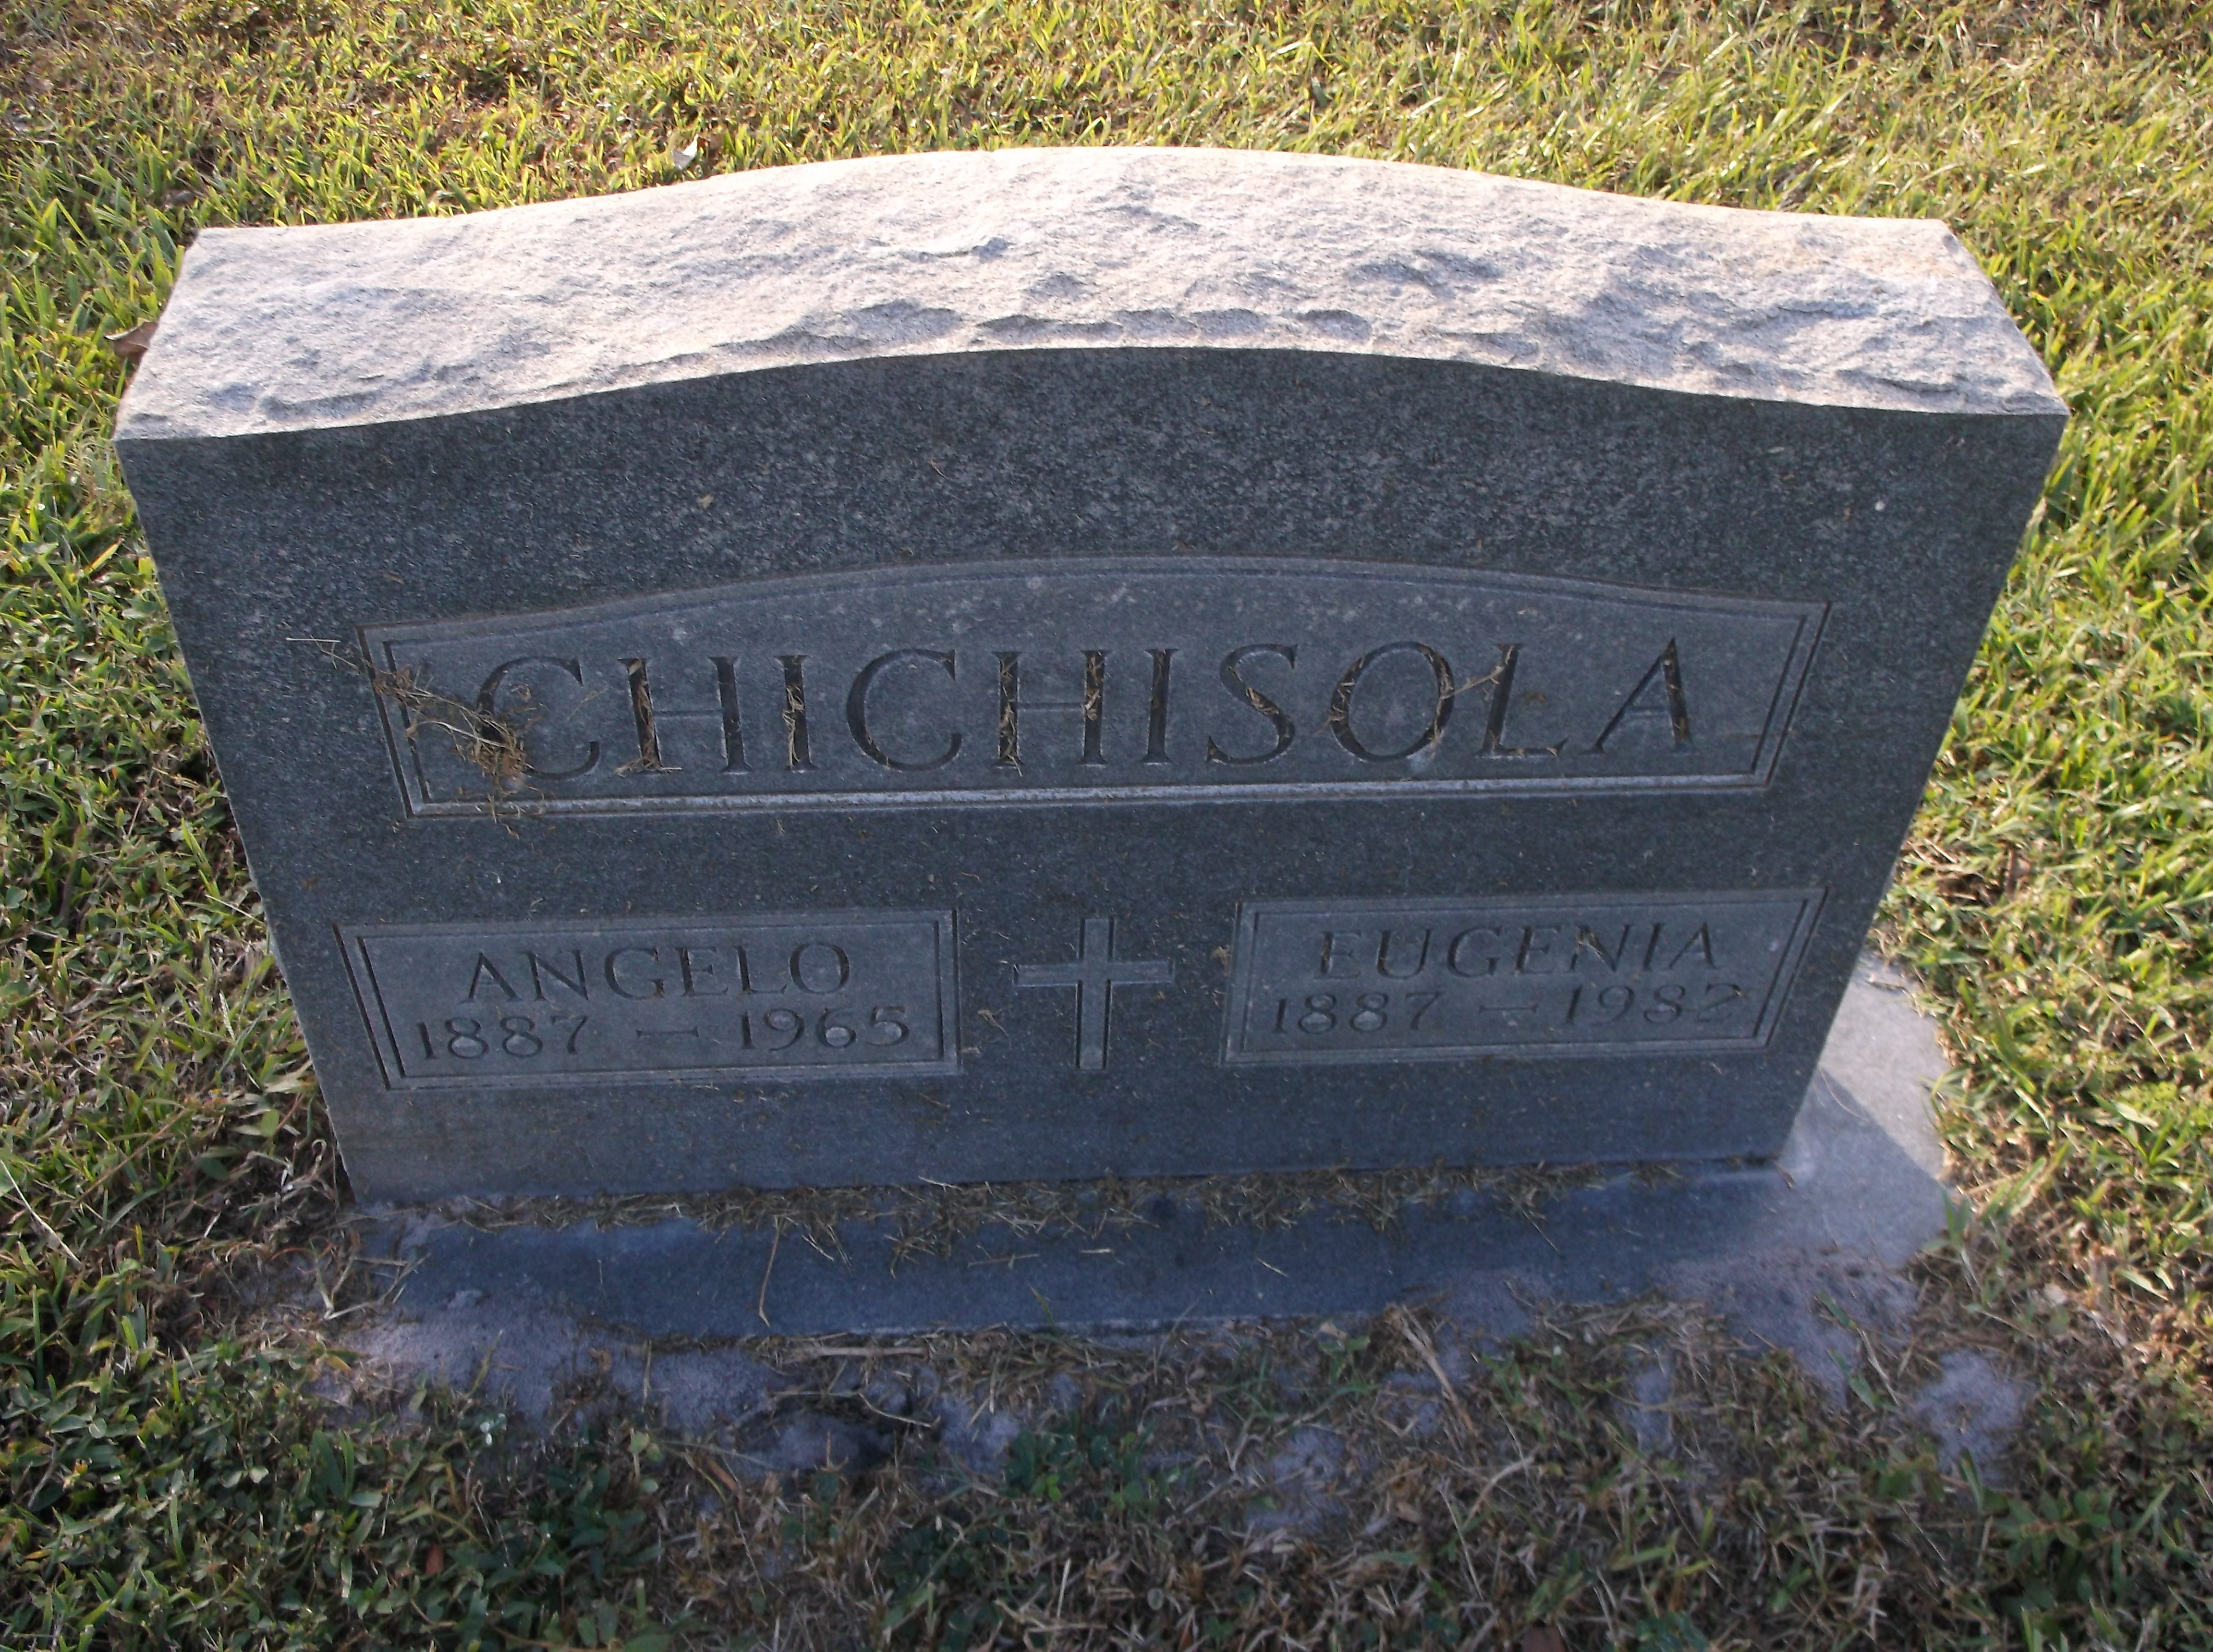 Eugenia Chichisola